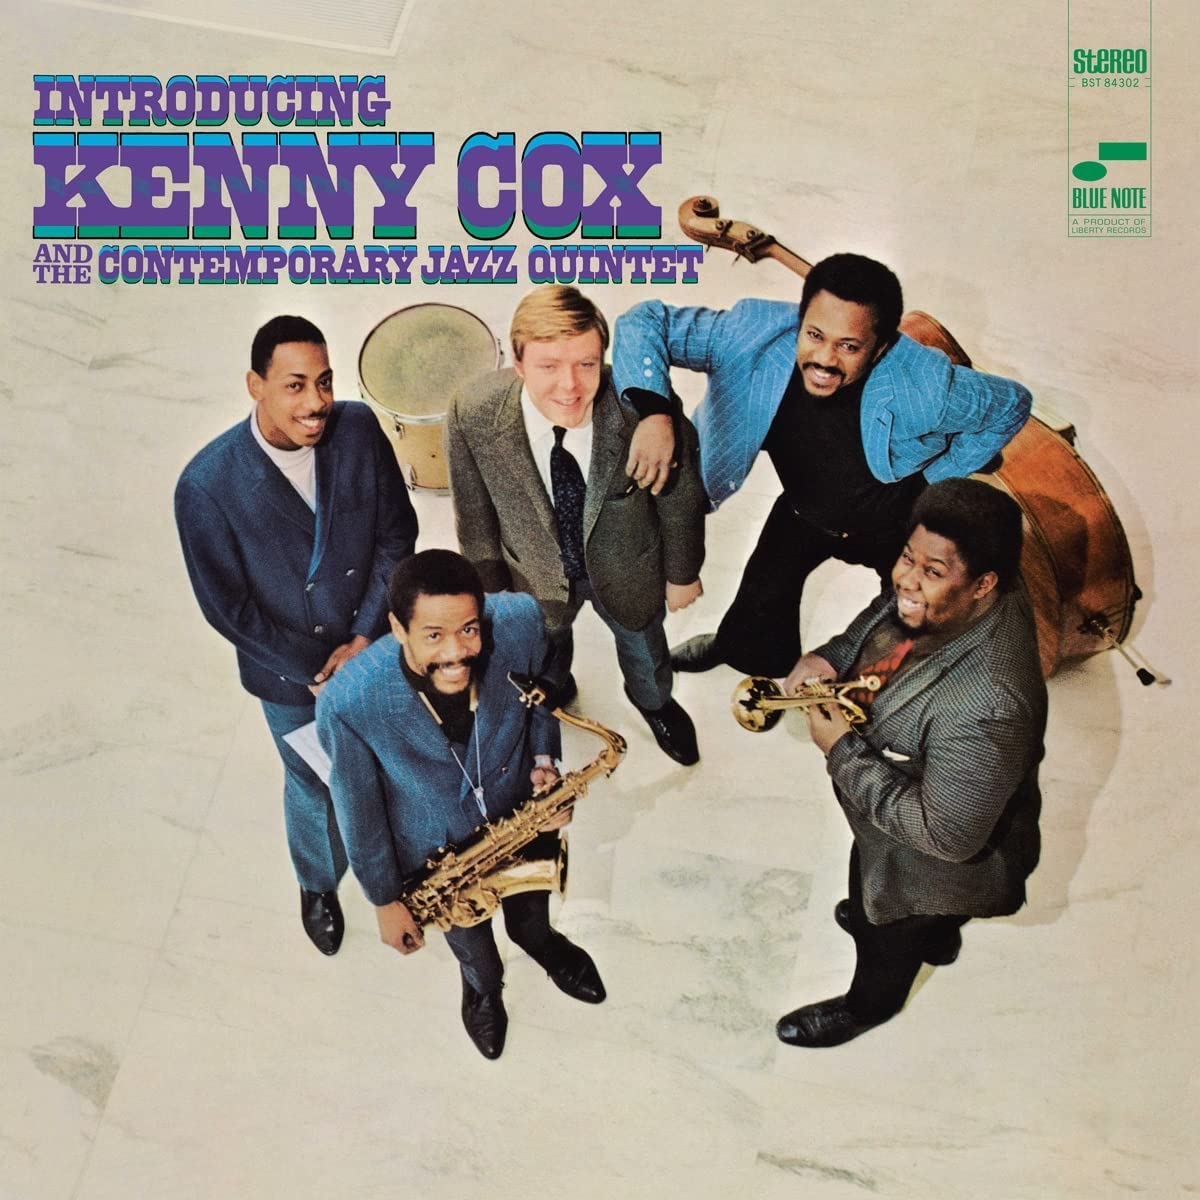 Kenny Cox - Introducing - LP (Classic)